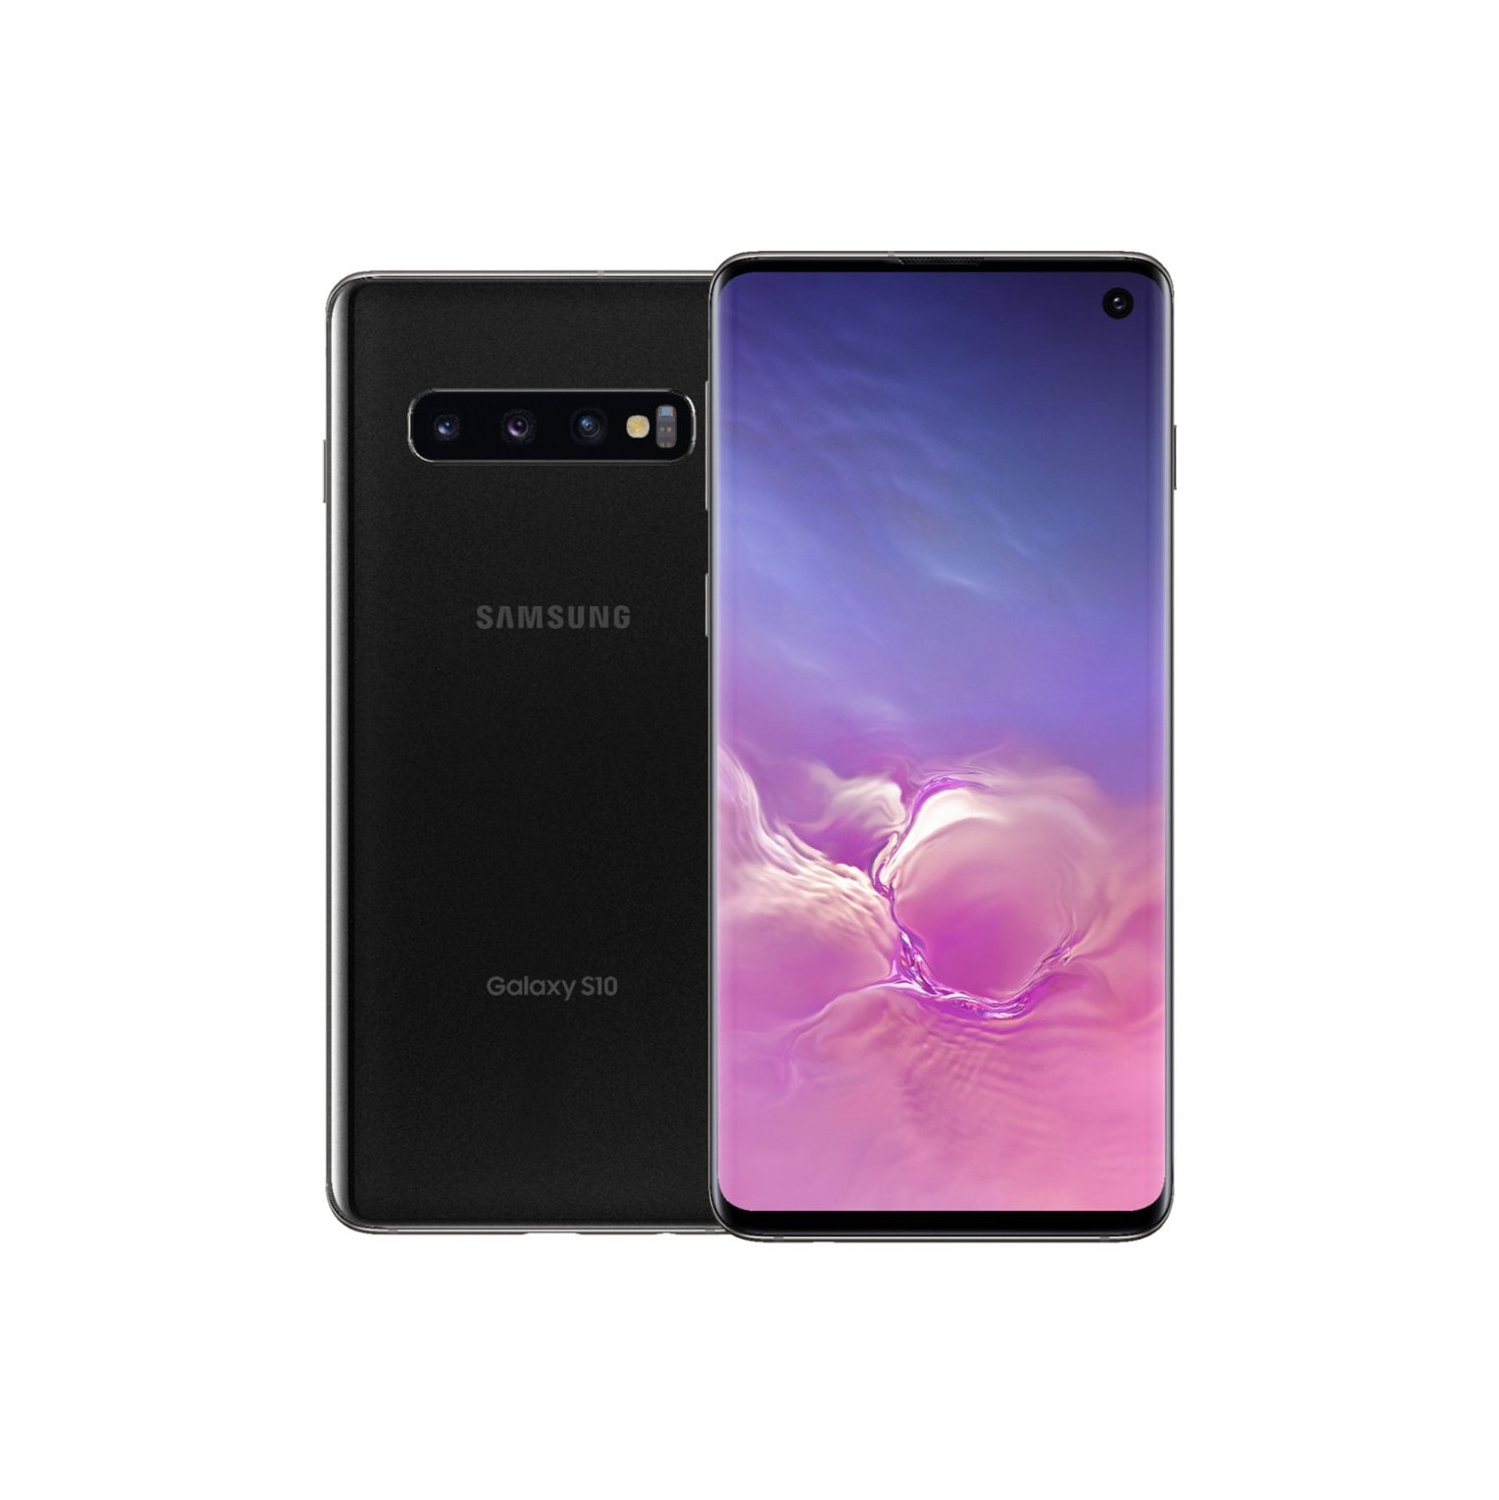 Samsung Galaxy S10 128GB Smartphone - Prism Black